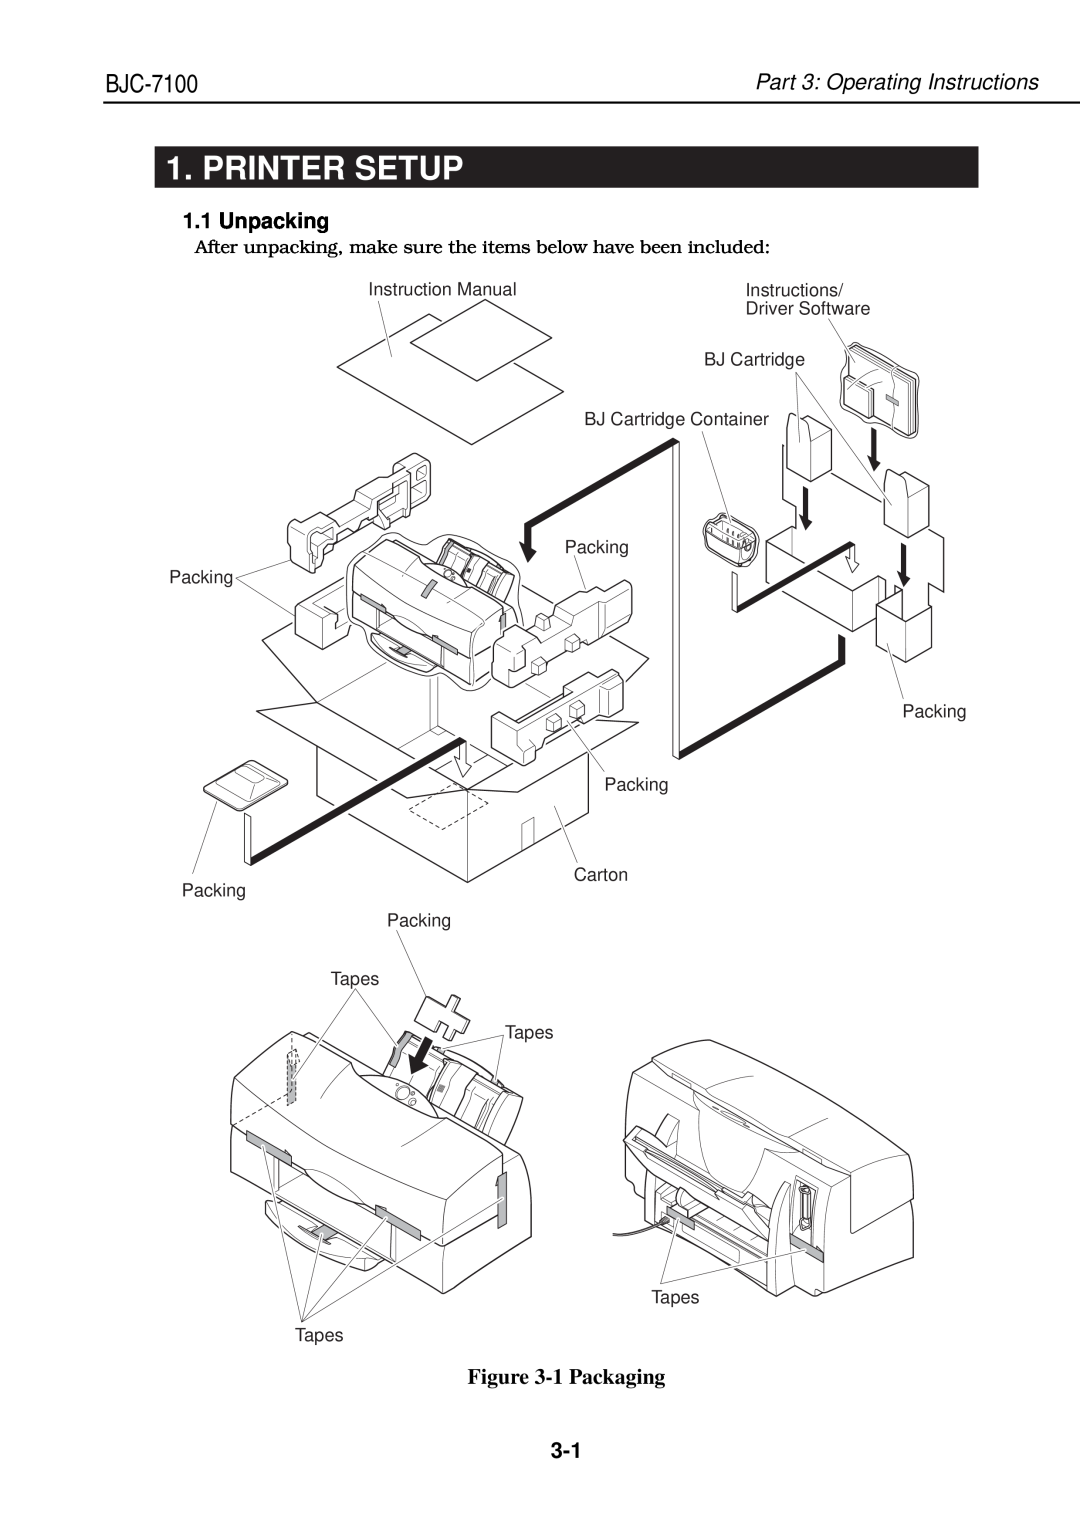 Canon QY8-1360-000 manual Printer Setup, Unpacking, 1 Packaging, BJC-7100, Part 3 Operating Instructions 